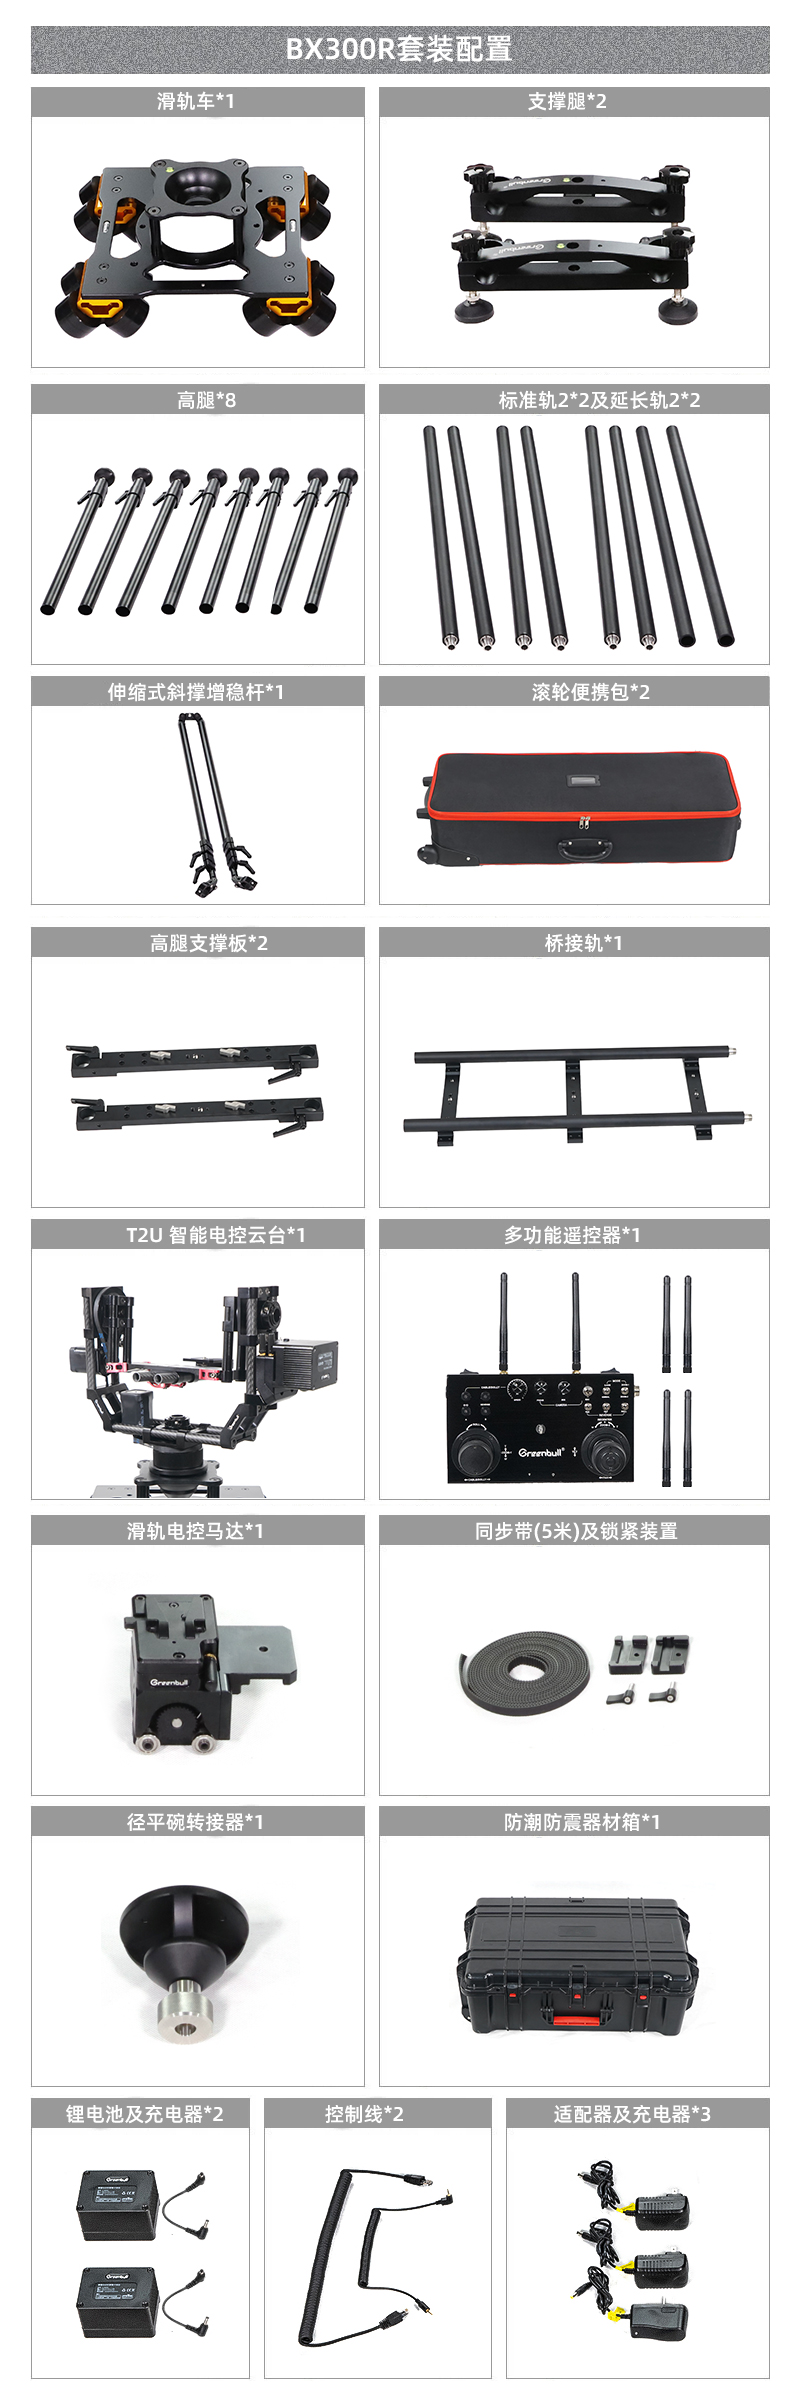 12产品全家福BX300R